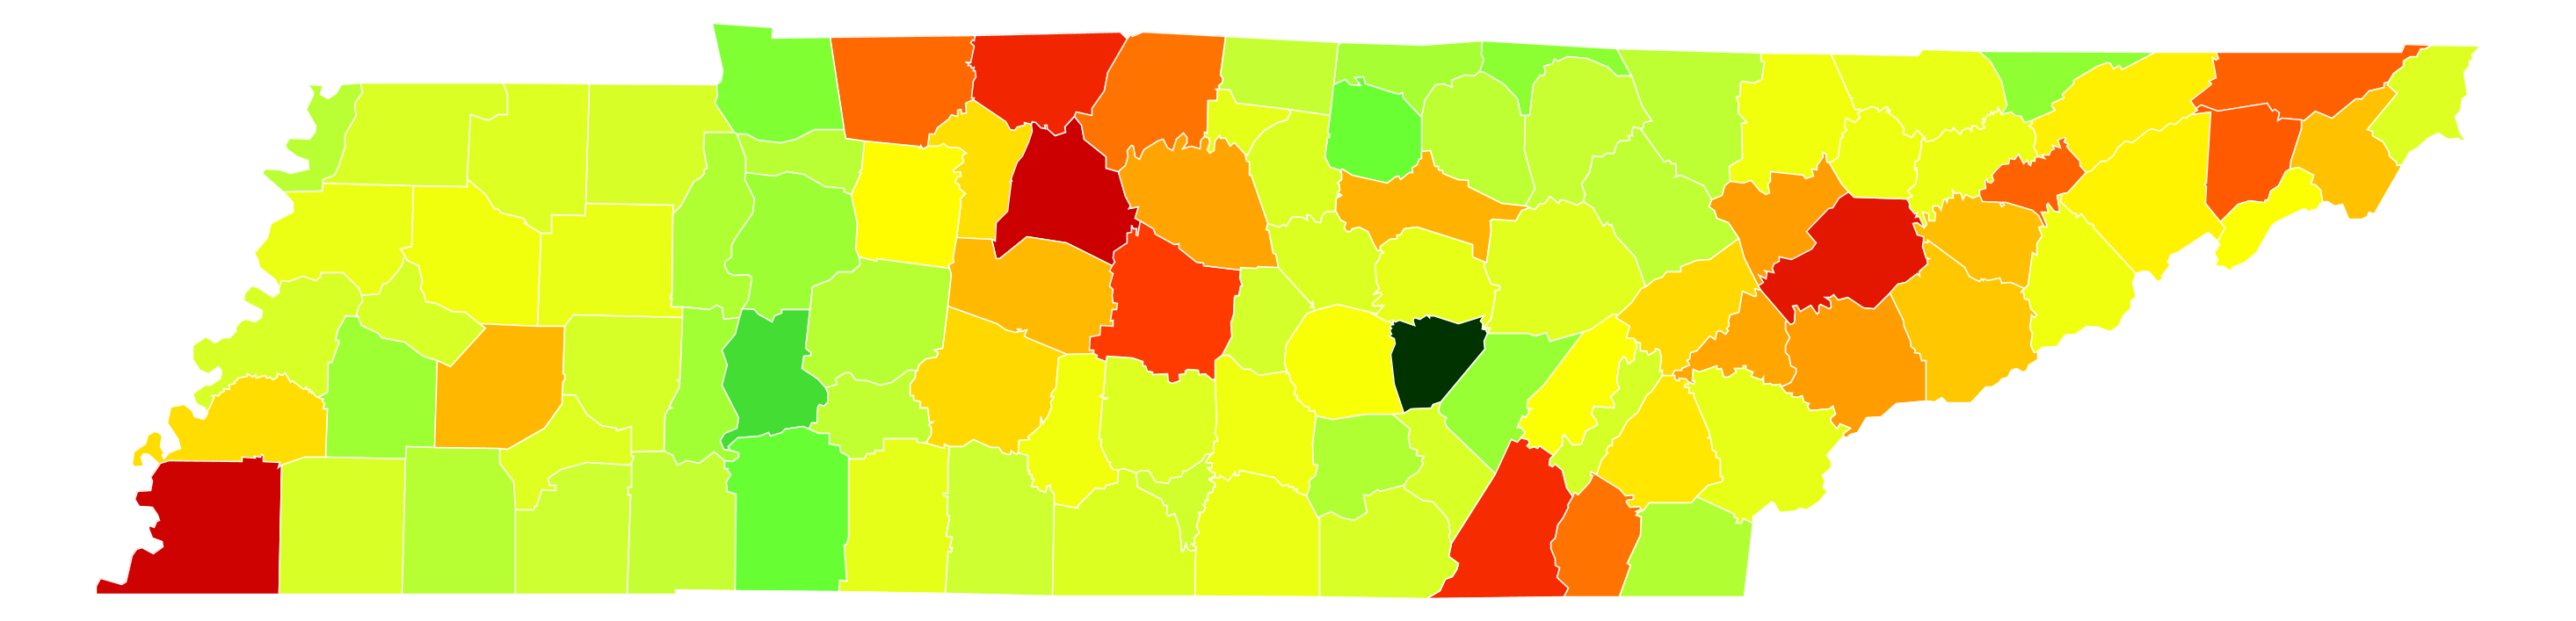 Tennessee Population Density